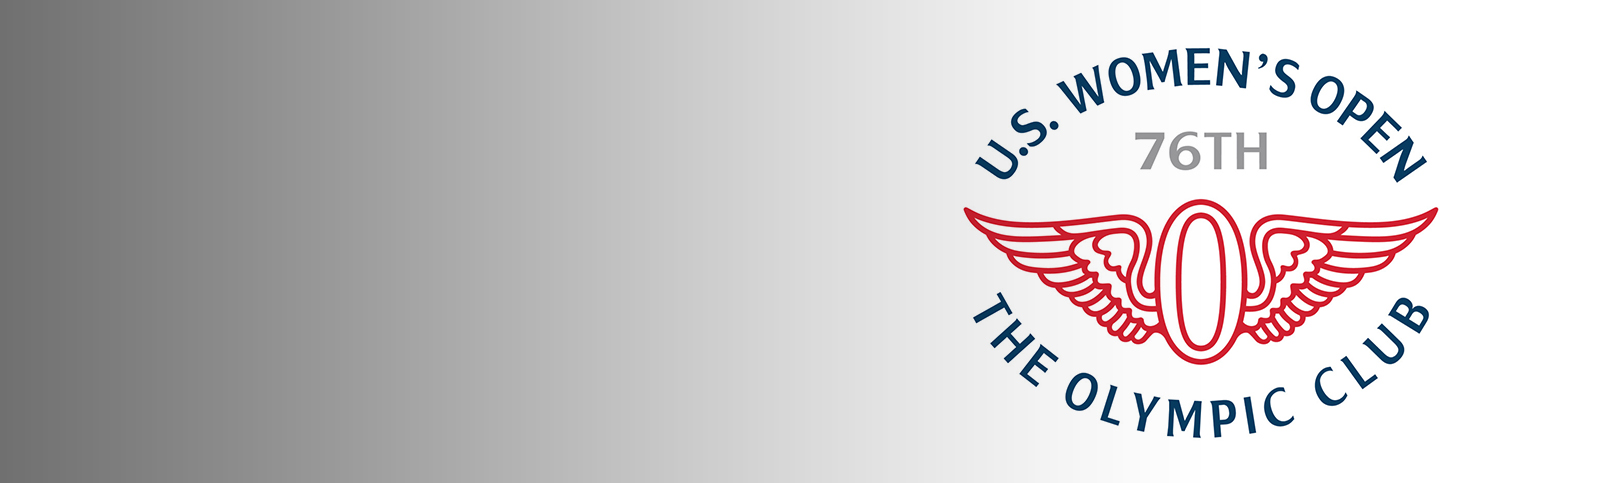 The 76th U.S. Women’s Open, The Olympic Club logo